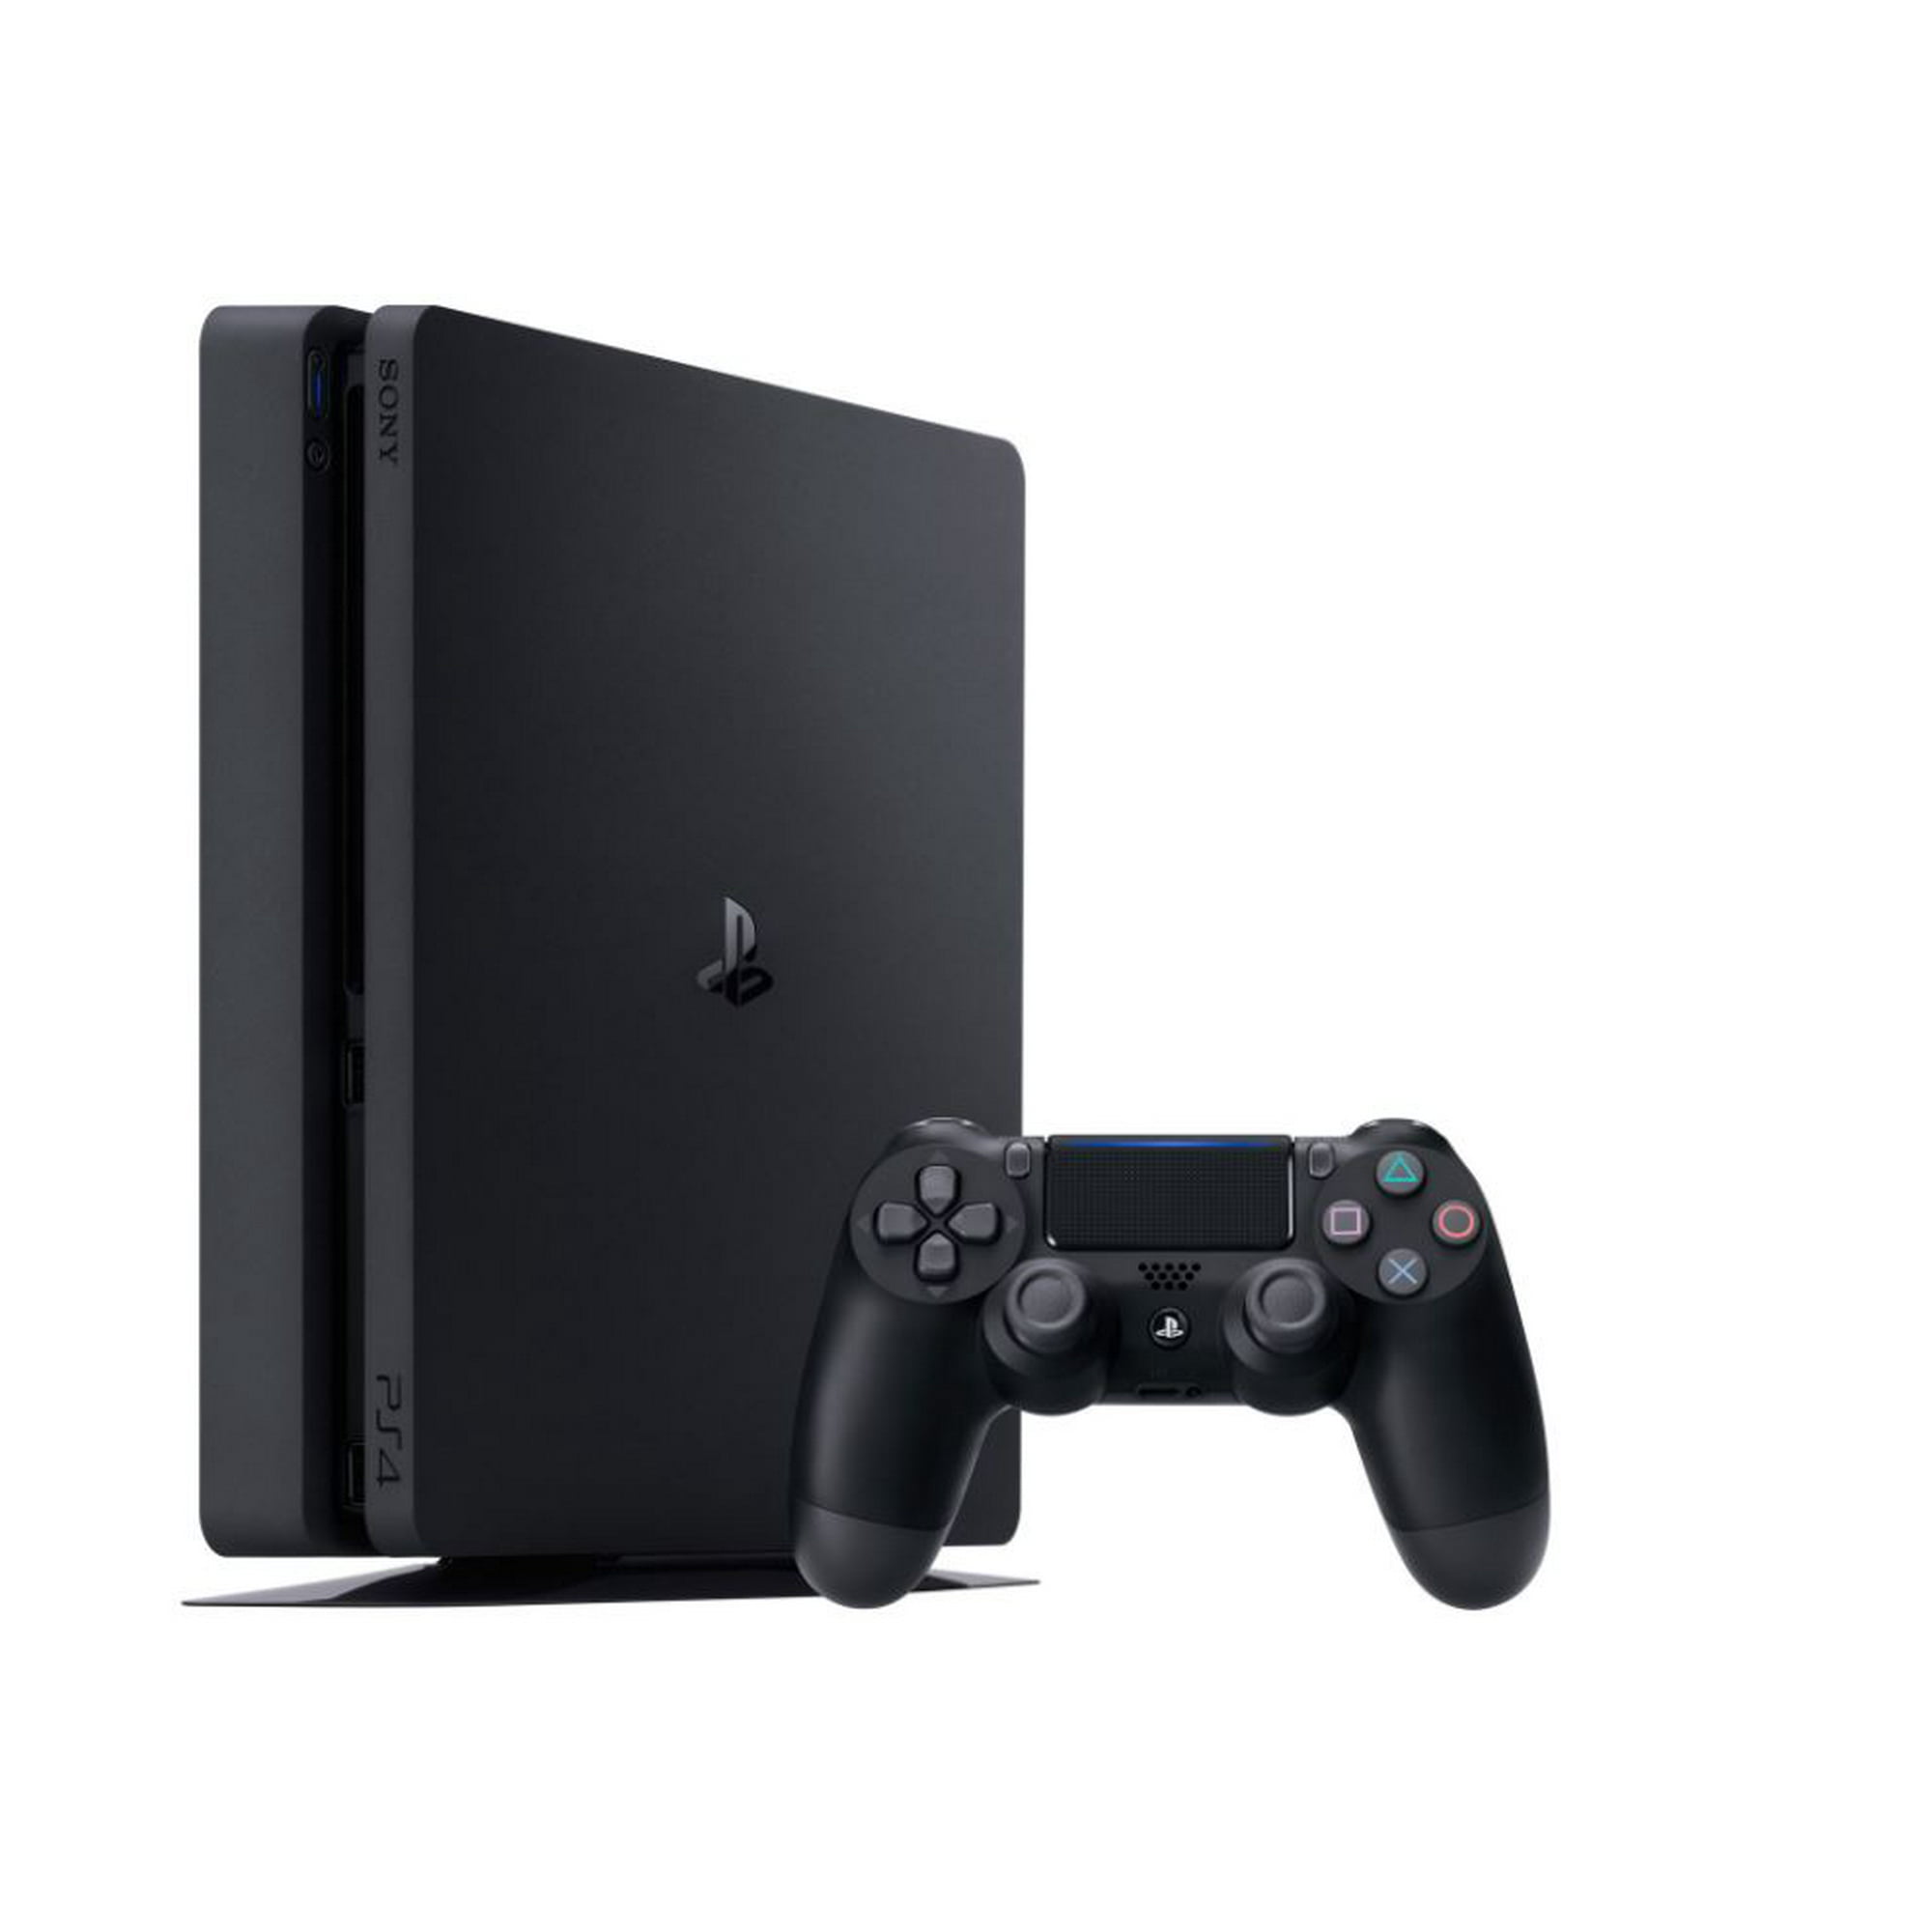 NEW Sony PlayStation 4 Slim 1TB Gaming Console, Black, CUH